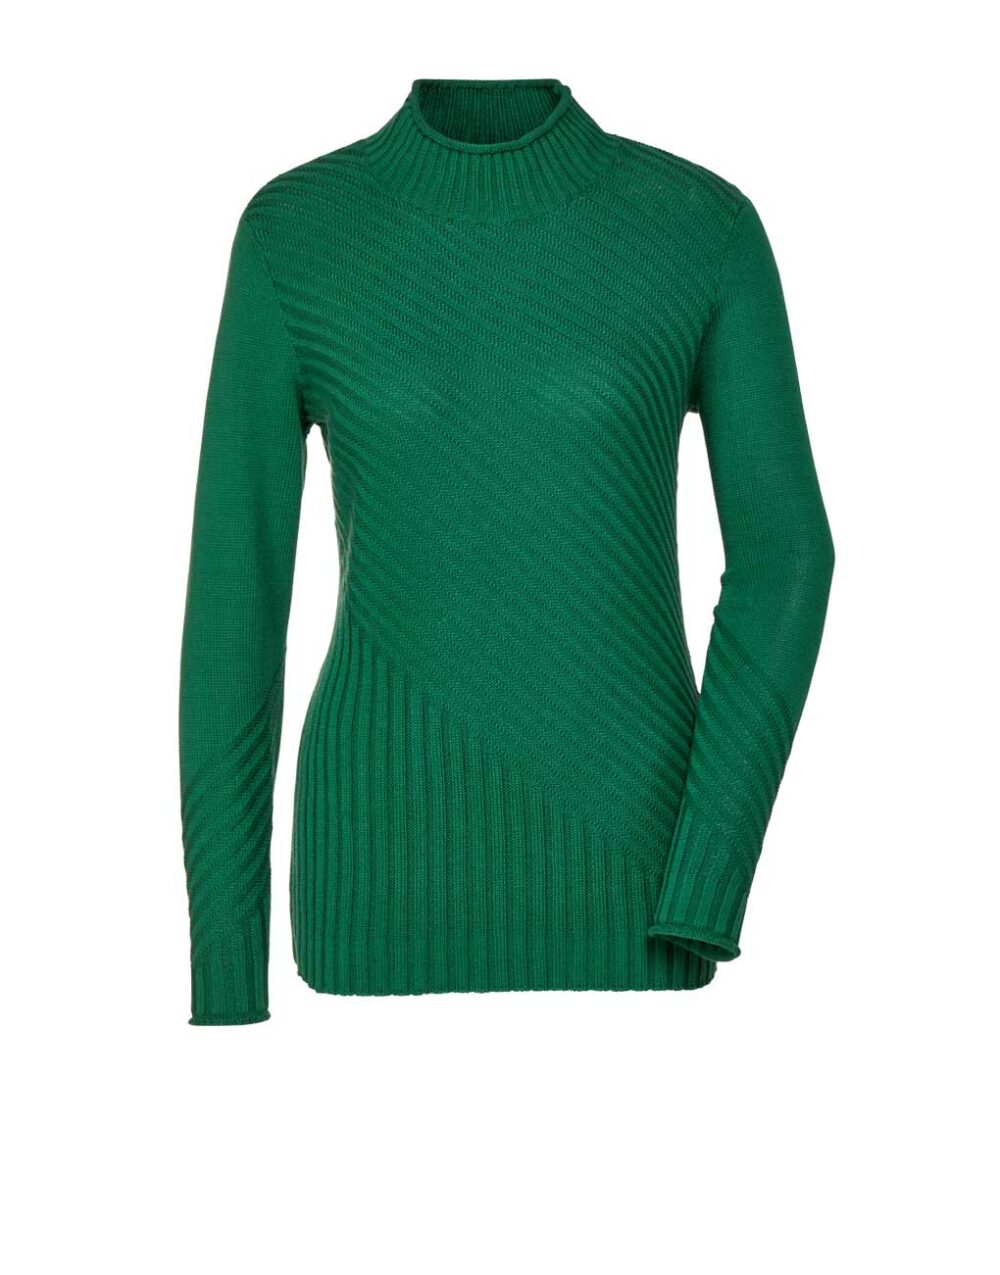 Pima-Baumwoll-Pullover, grün Missforty